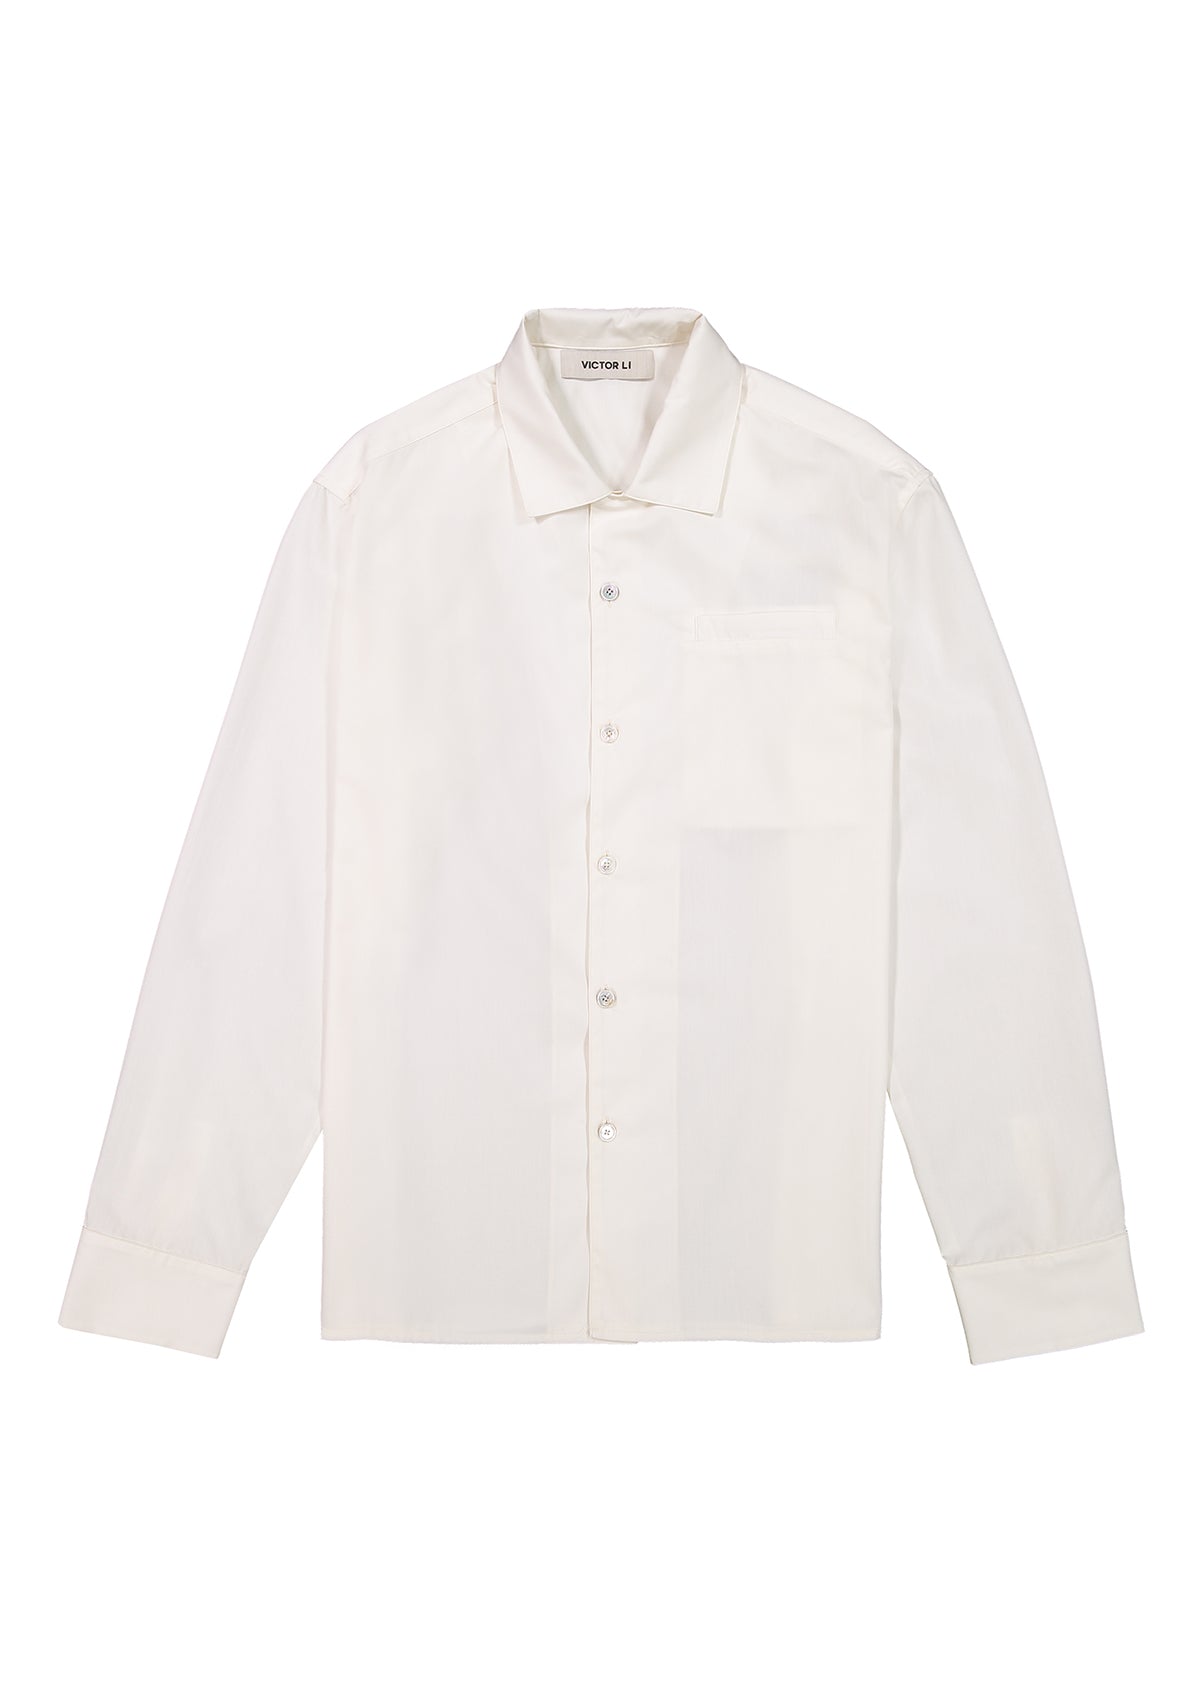 Camp Shirt White | Long Sleeve Shirts | Victor Li Fashion